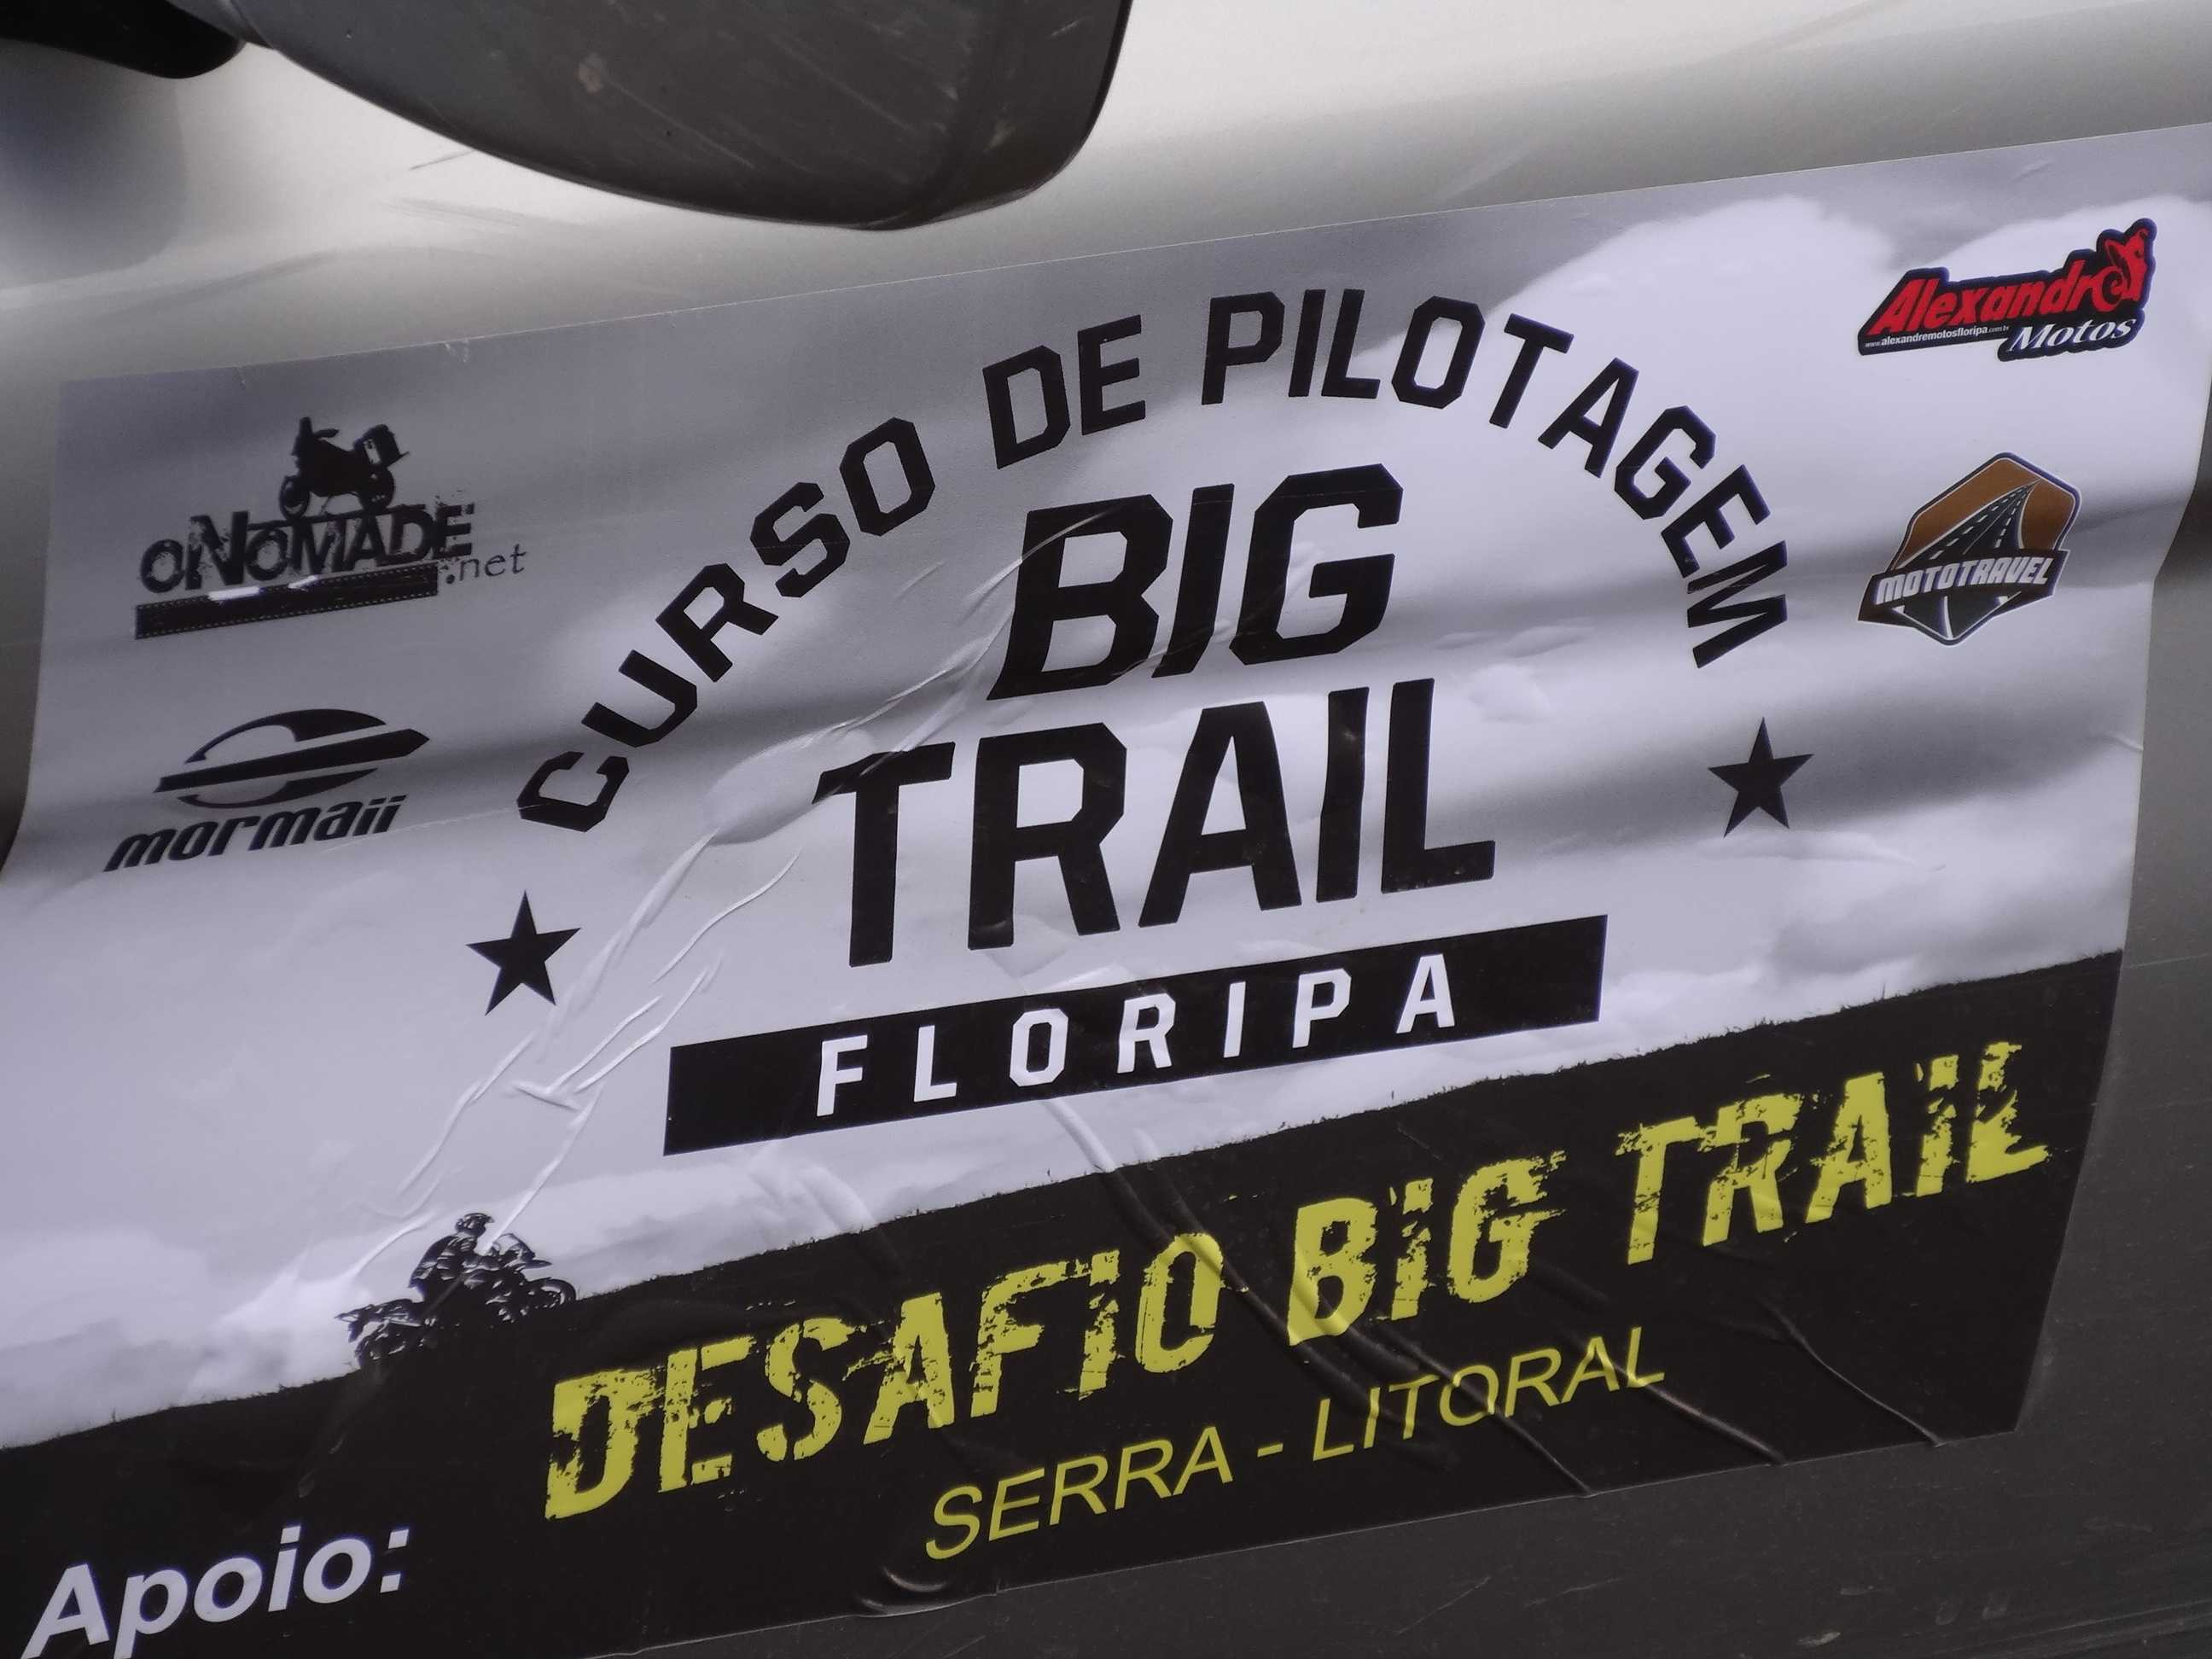 Desafio Big Trail by Curso de pilotagem BIG TRAIL Floripa